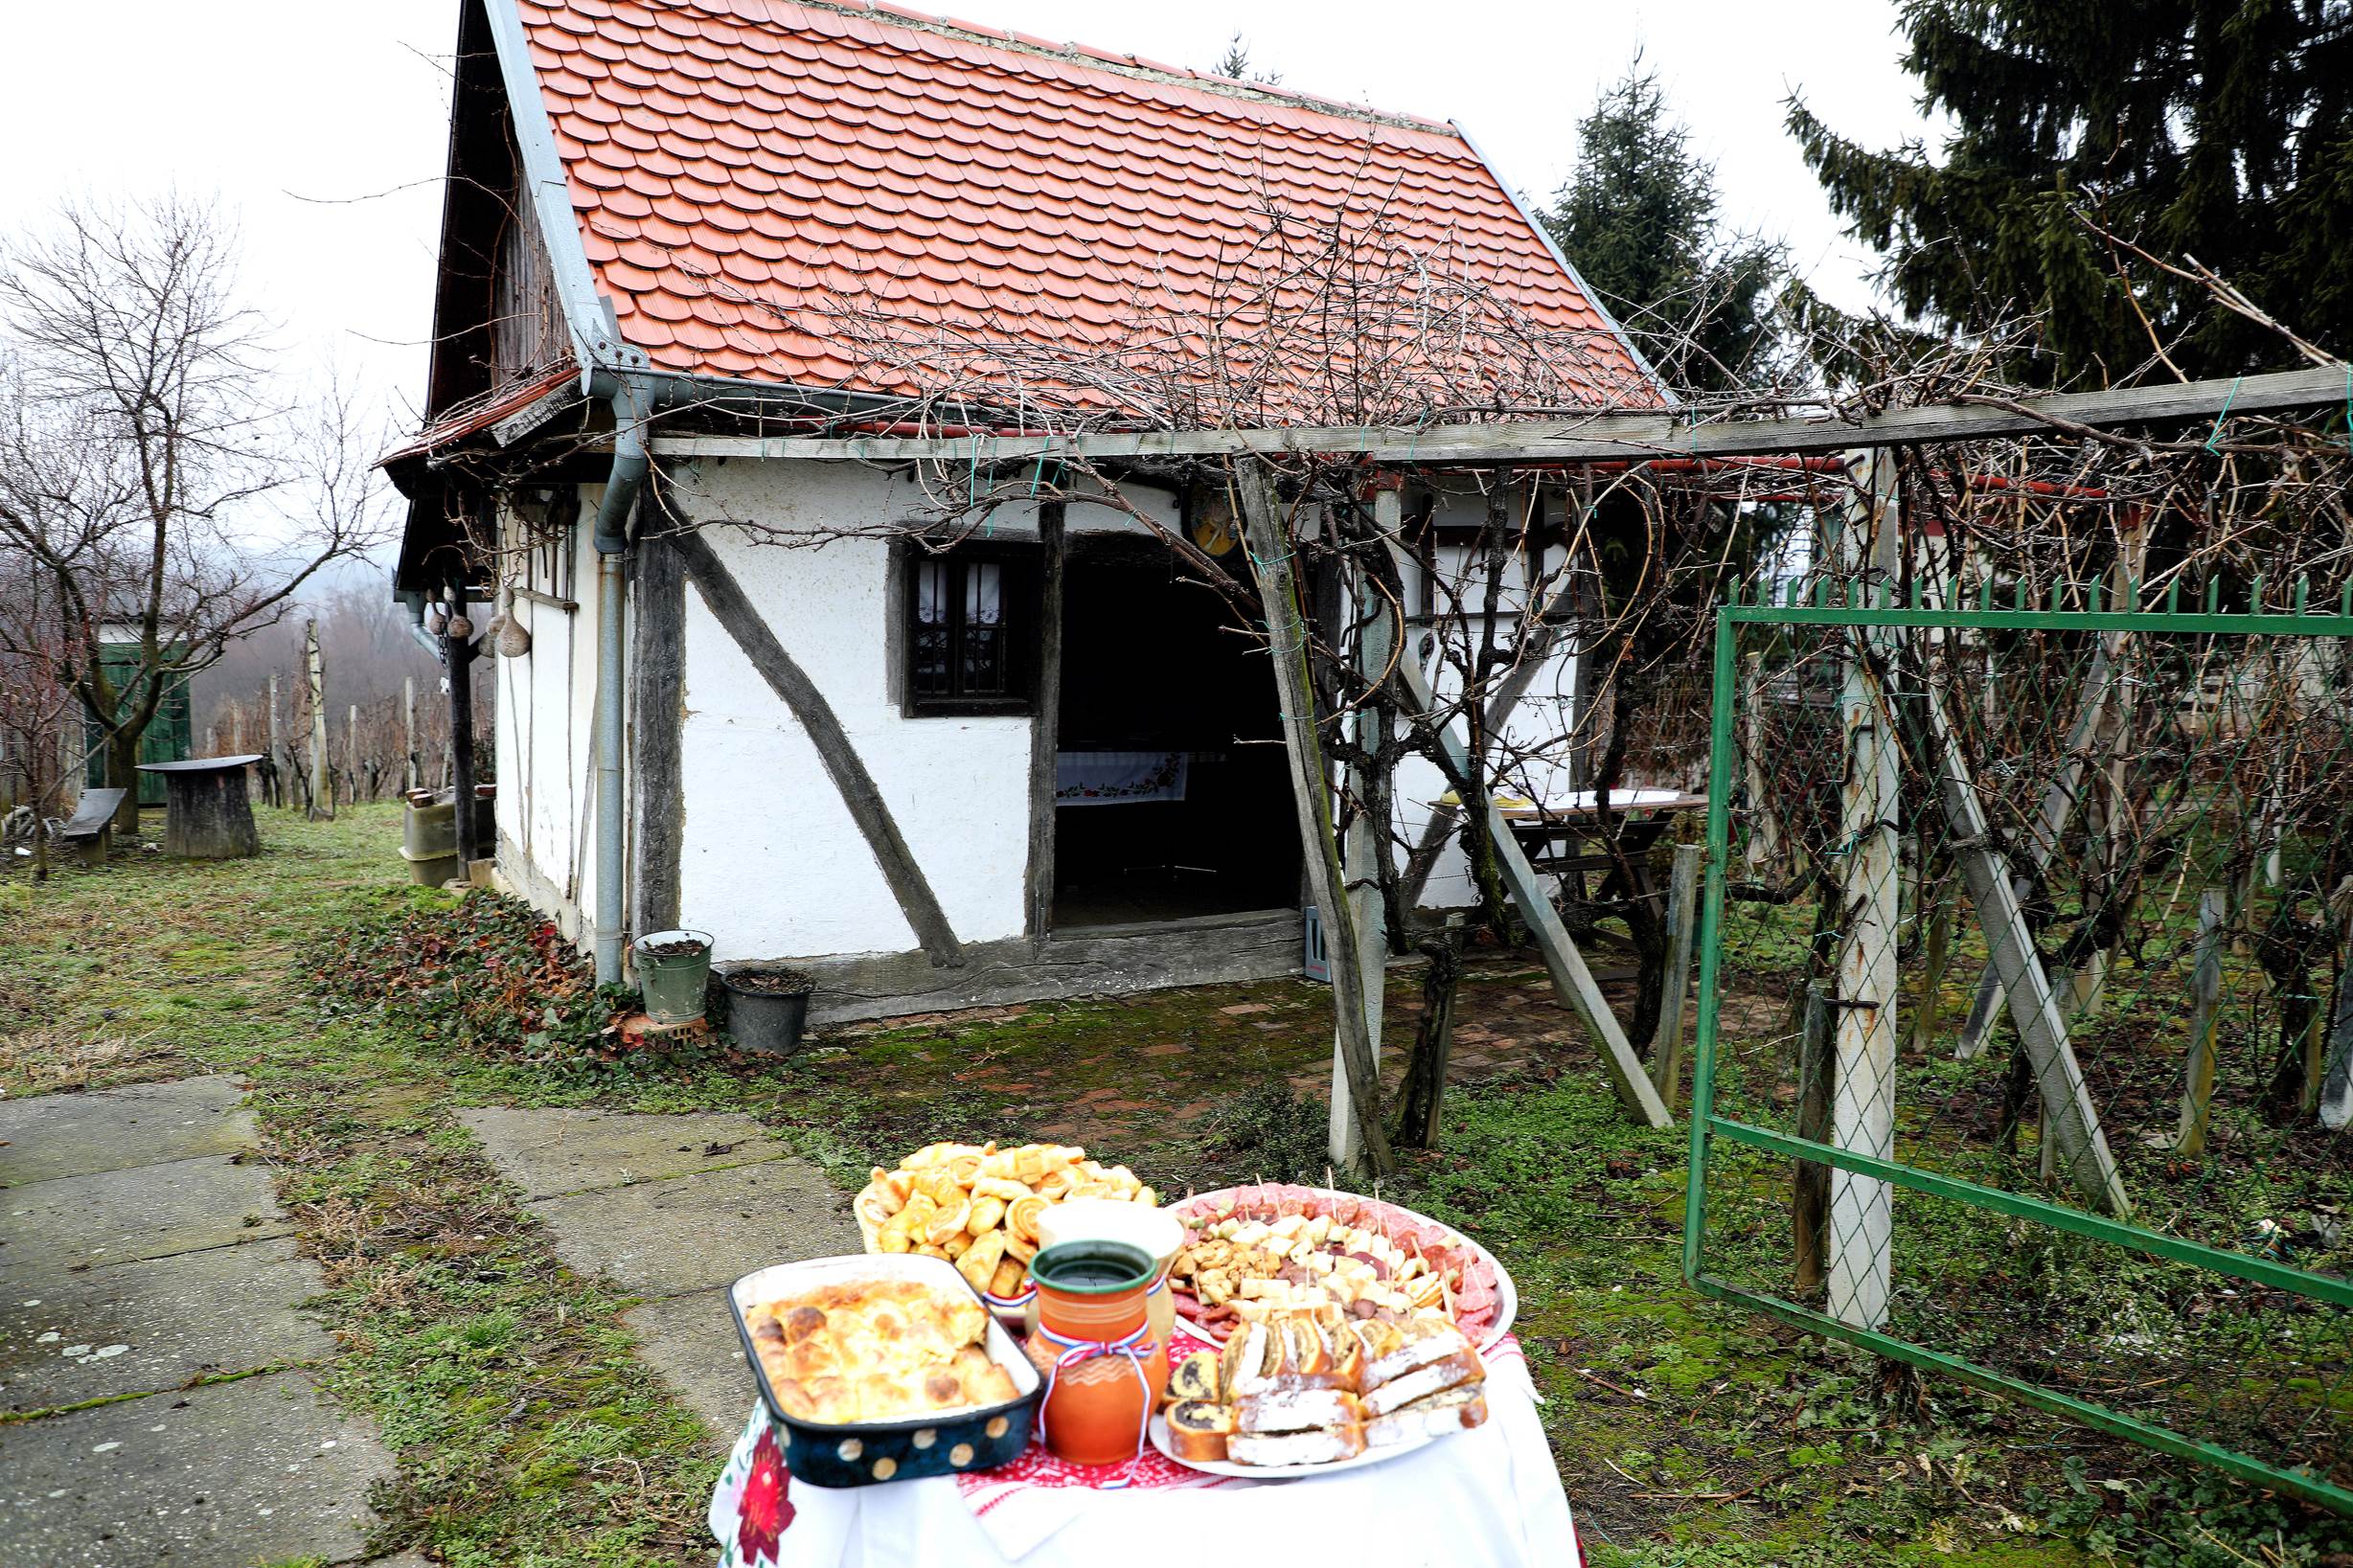 Croatian Traditions on Vincekovo celebrated on 22 January 